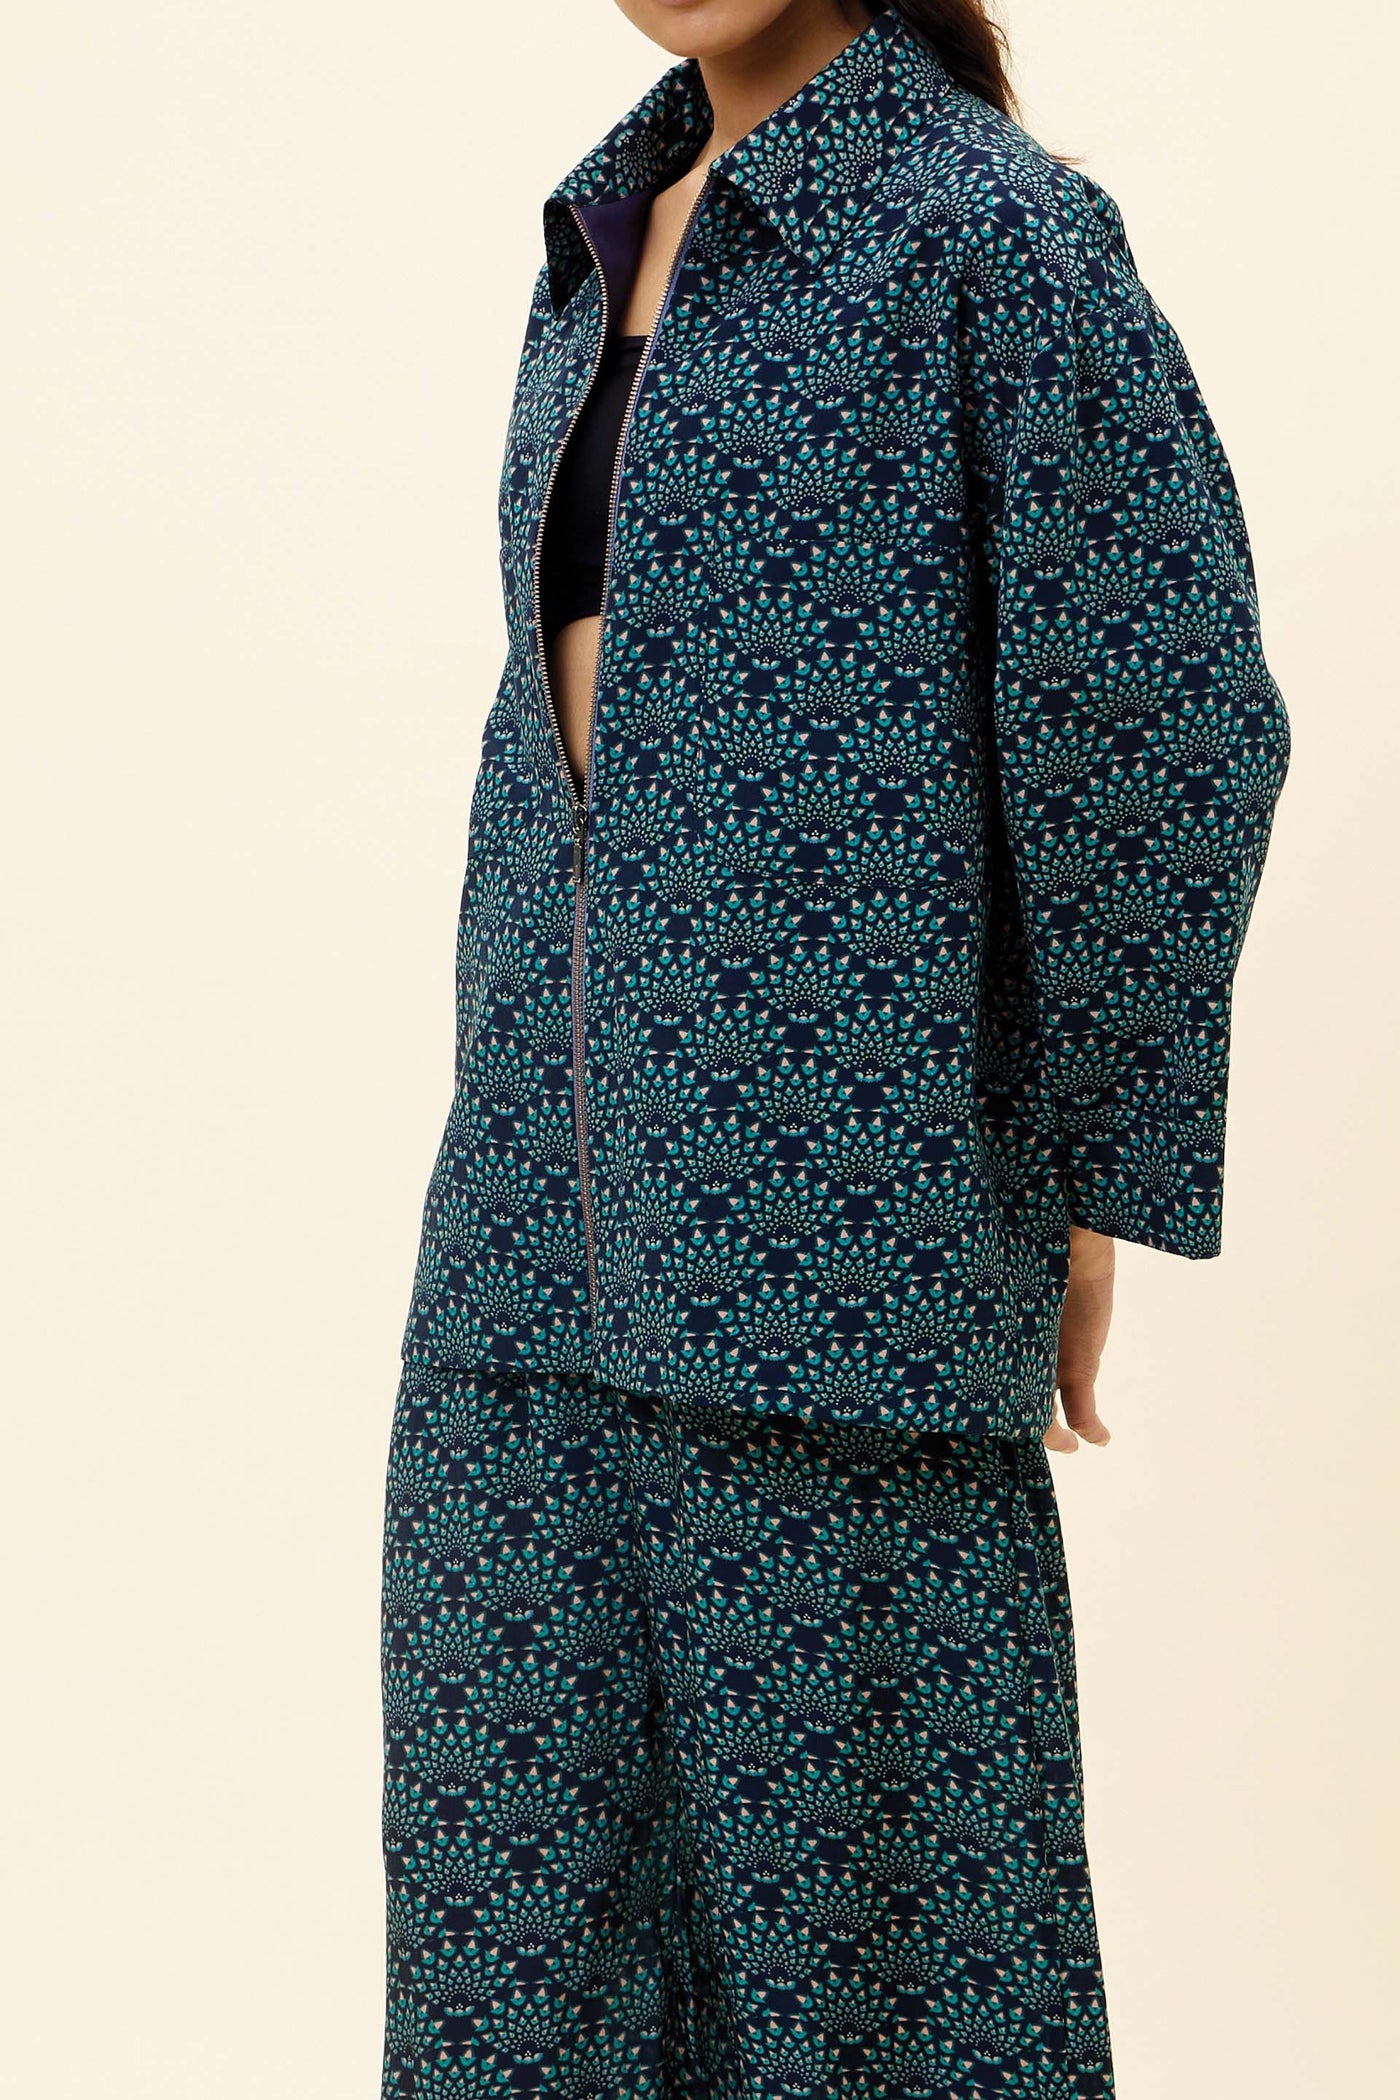 sva Blue Feather Print Oversized Shaket With Pants online shopping melange singapore indian designer wear